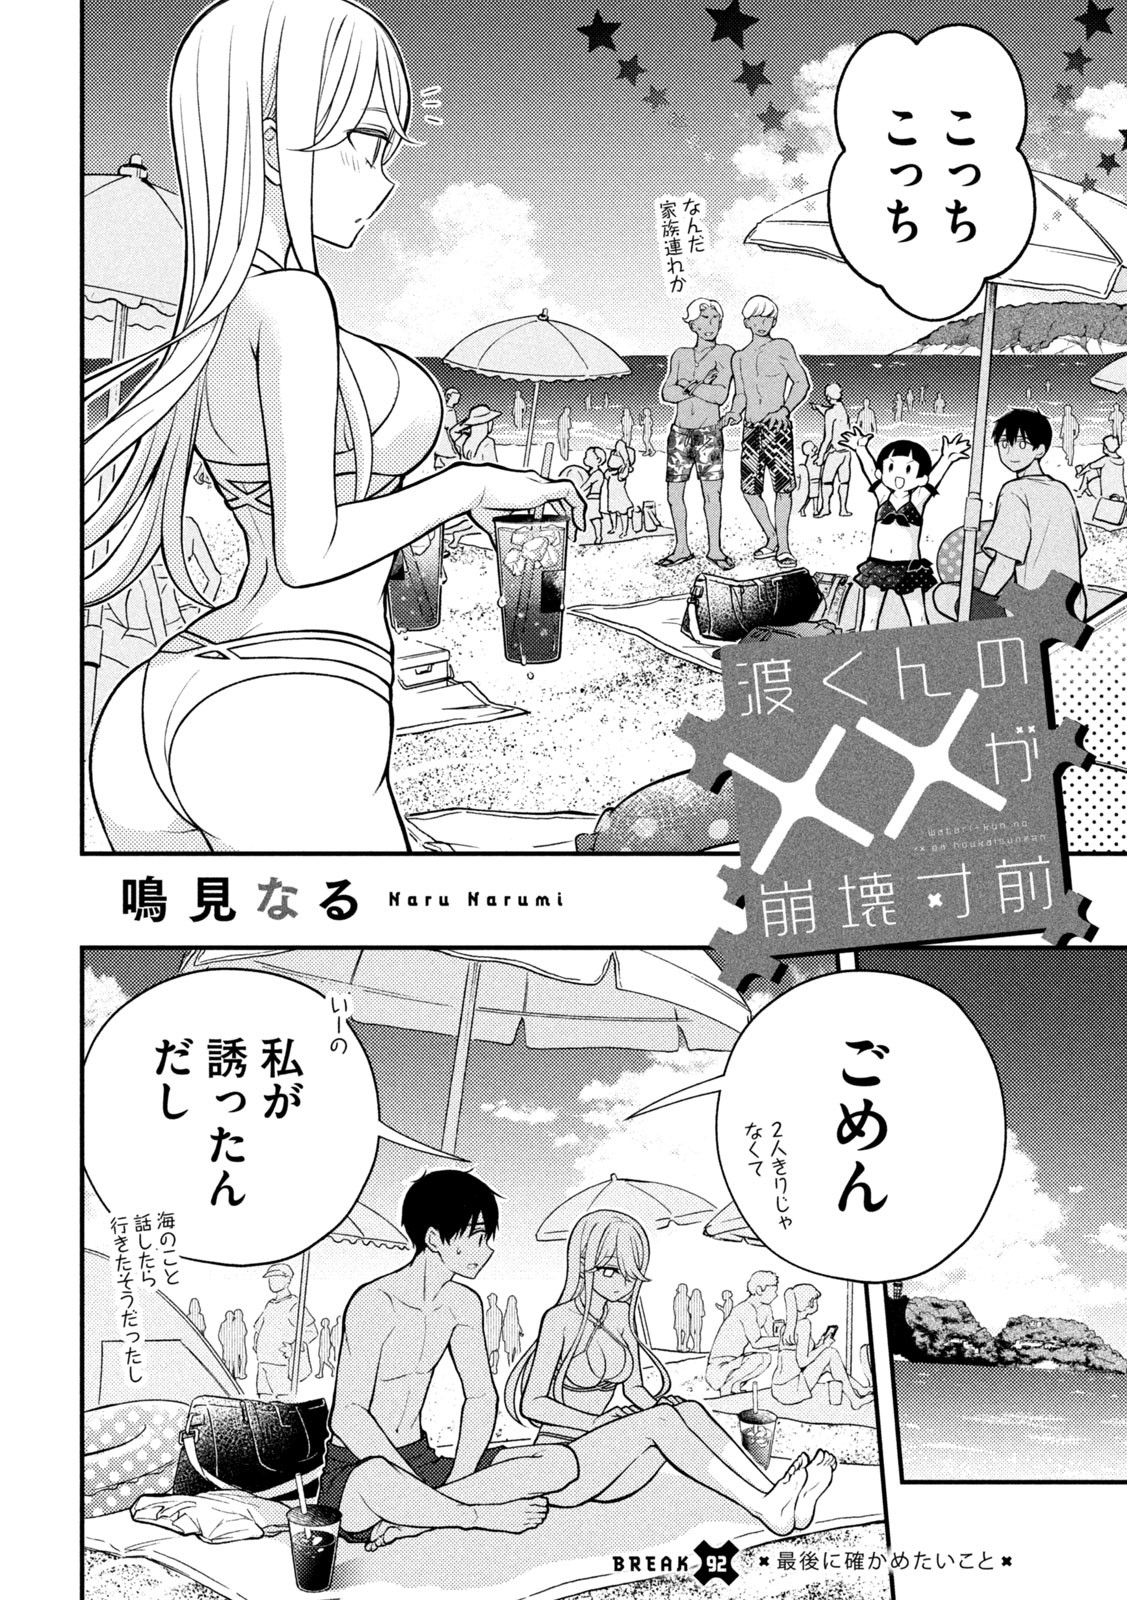 Watari-kun no xx ga Houkai Sunzen - Chapter 92 - Page 2